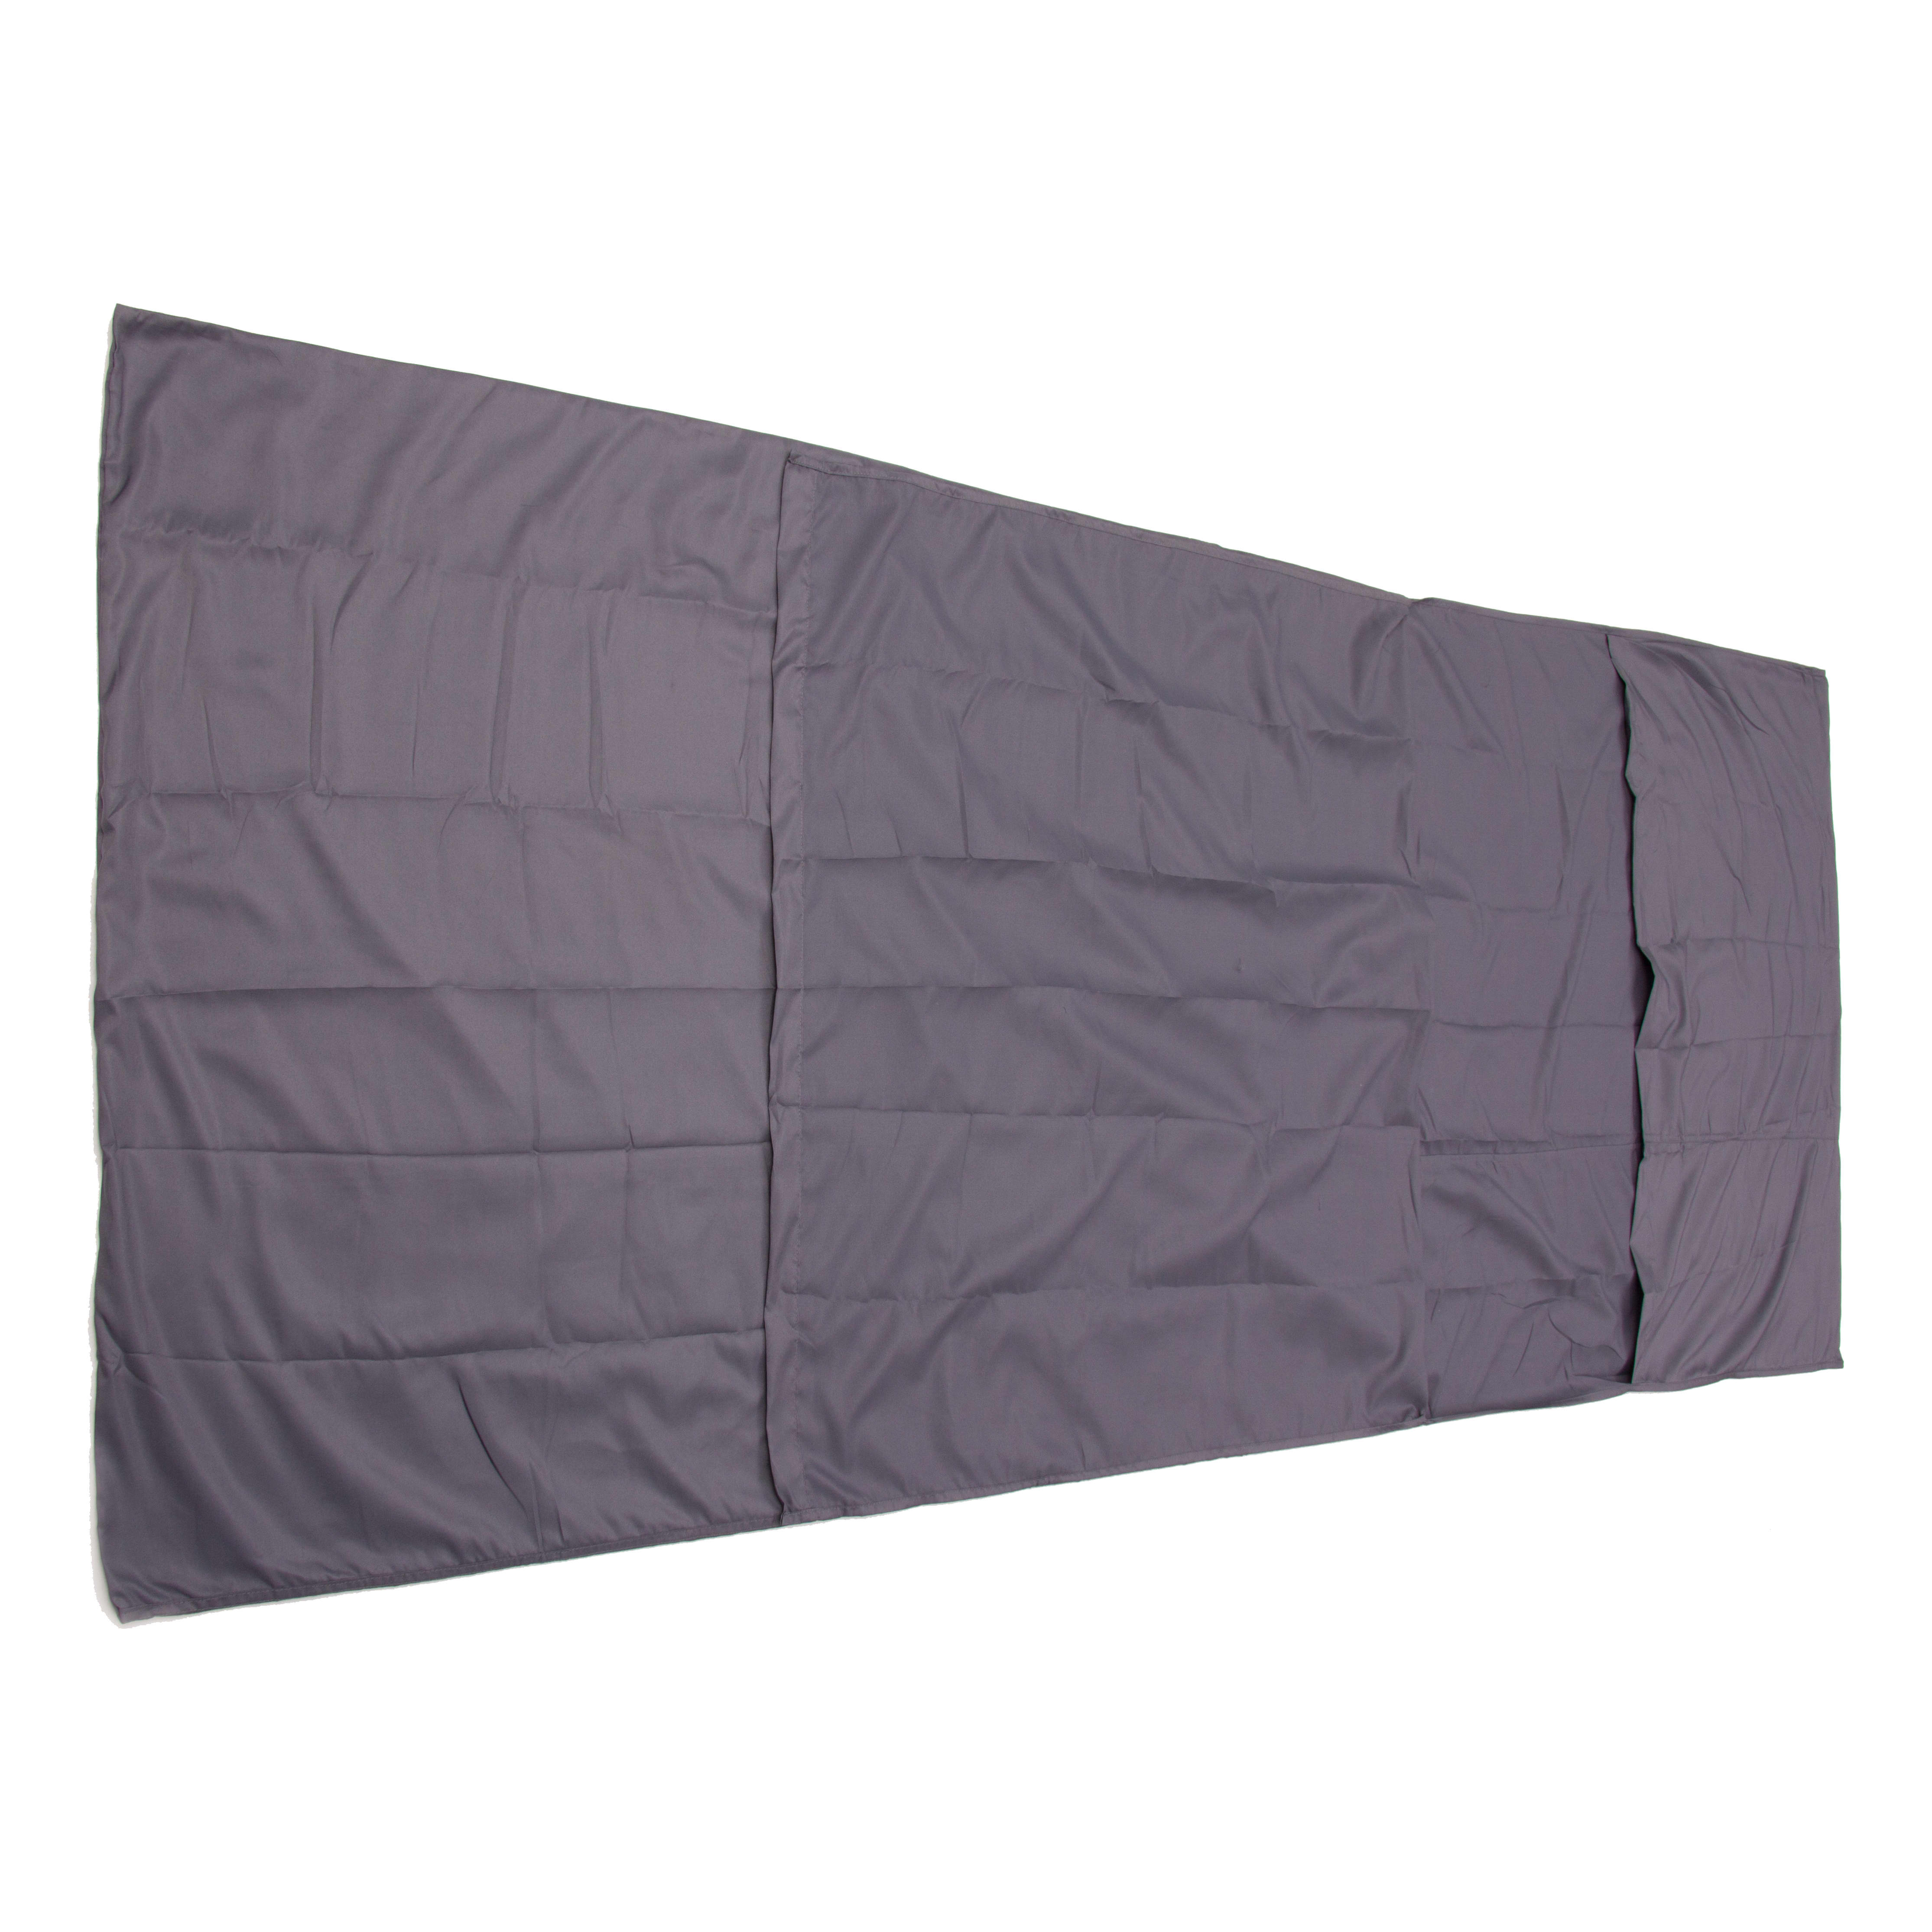 Hotcore® Suresoft Sleeping Bag Liner - Rectangular